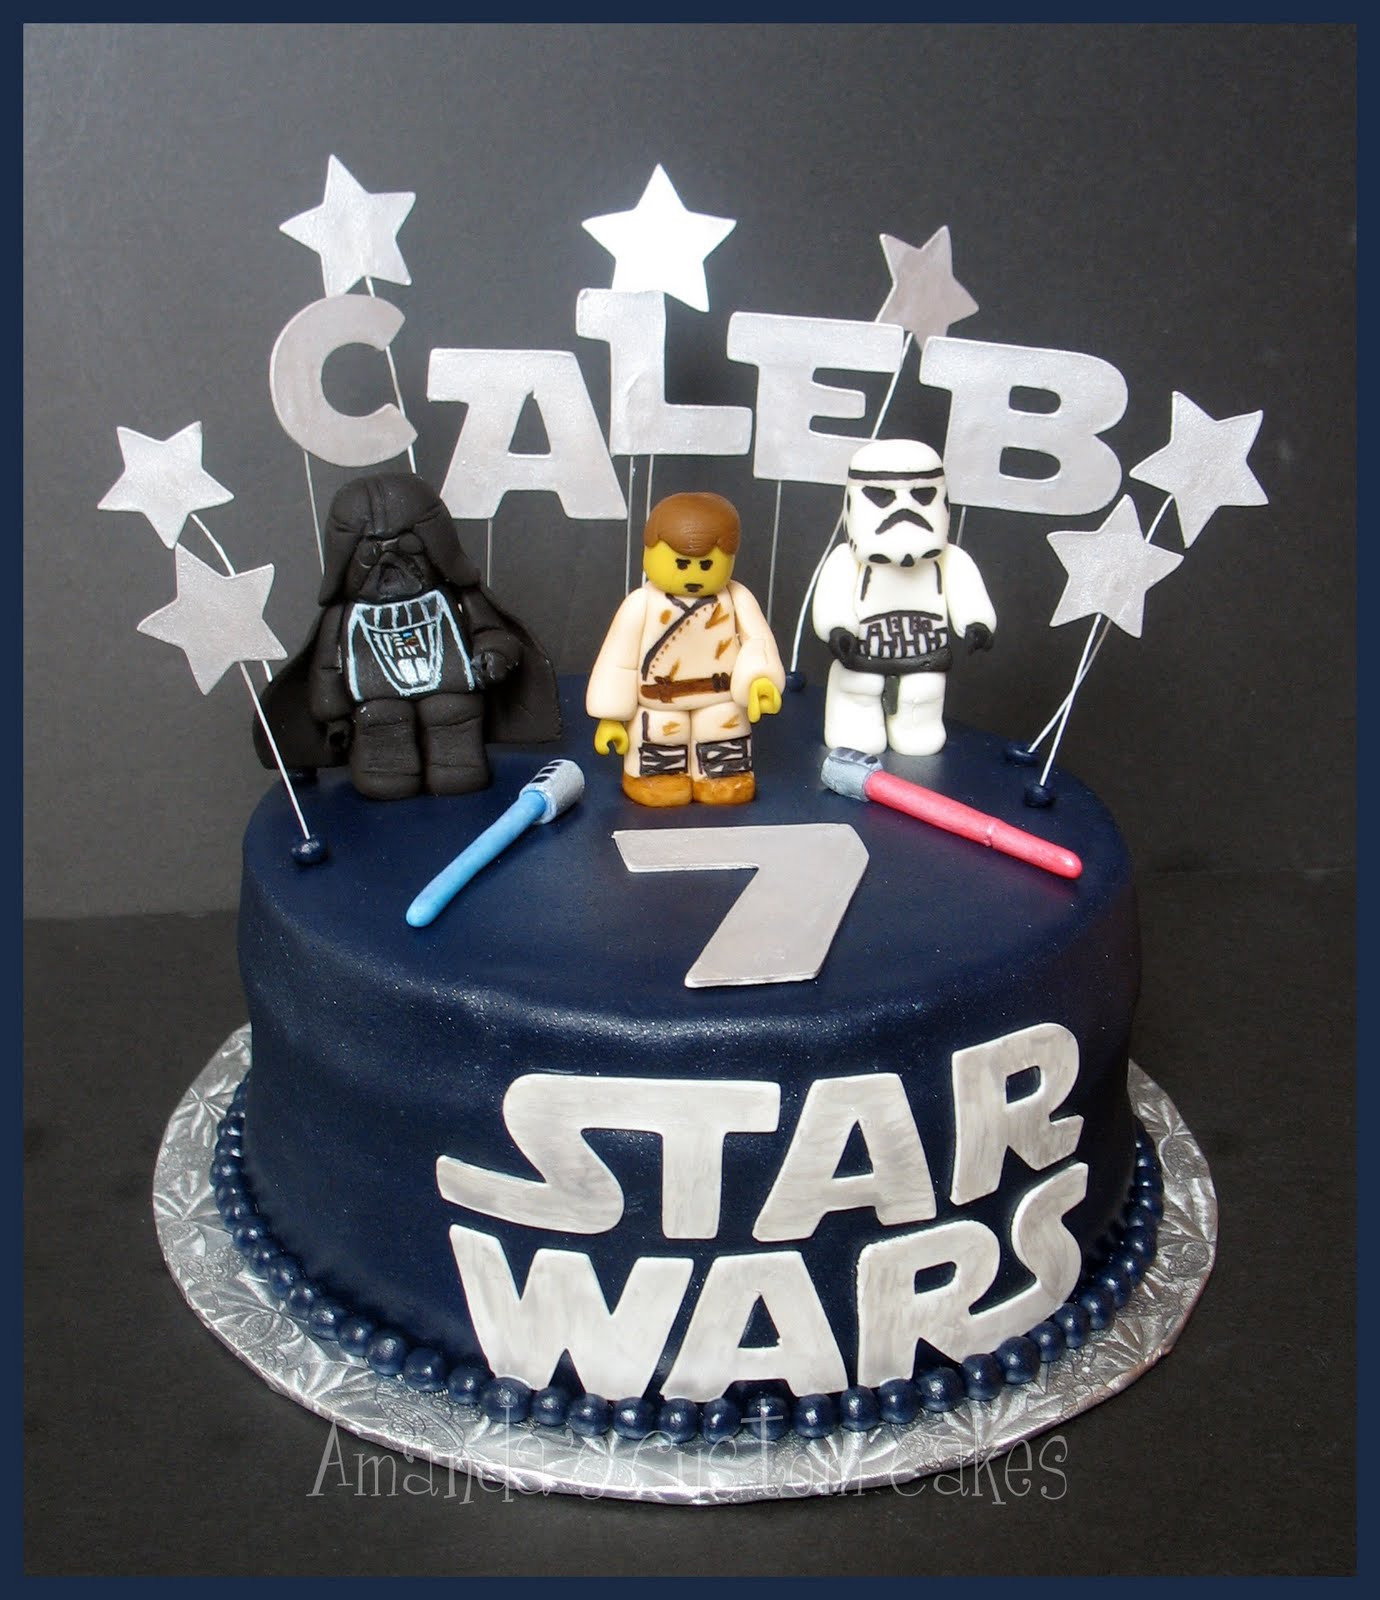 Star Wars Birthday Cake Decorations
 Amanda s Custom Cakes Lego Star Wars